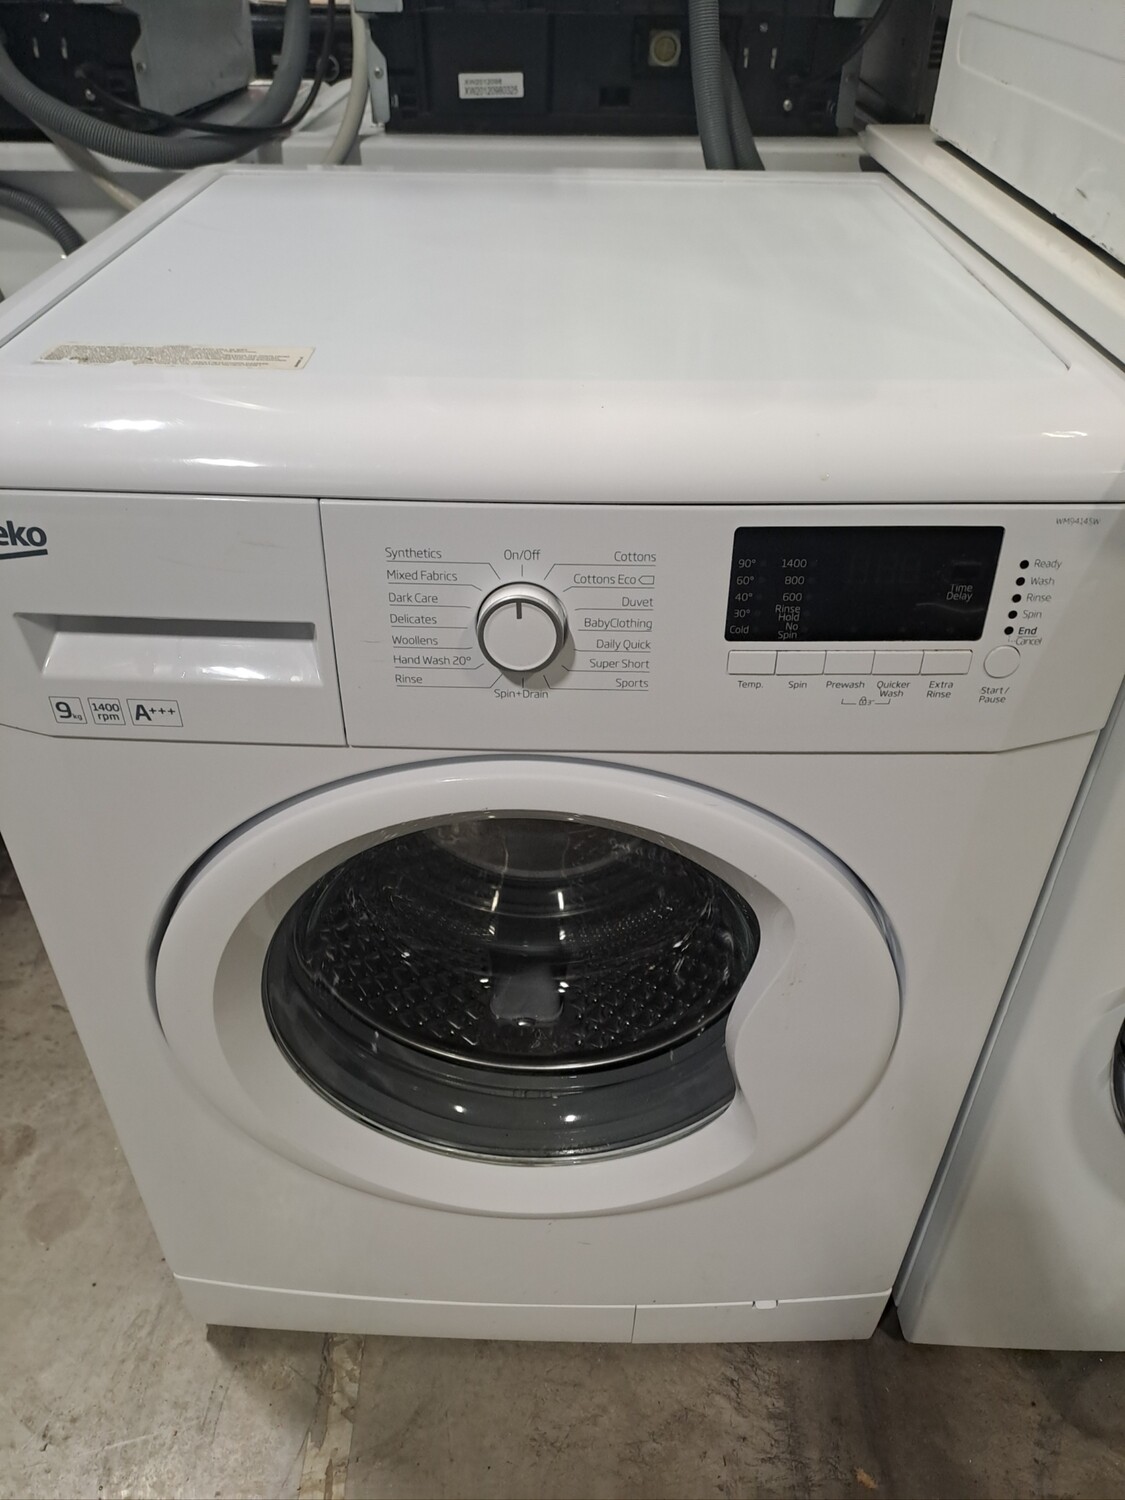 Beko WM94145W 9kg Load 1400 Spin A+++ Washing Machine - White - Refurbished - 6 Month Guarantee